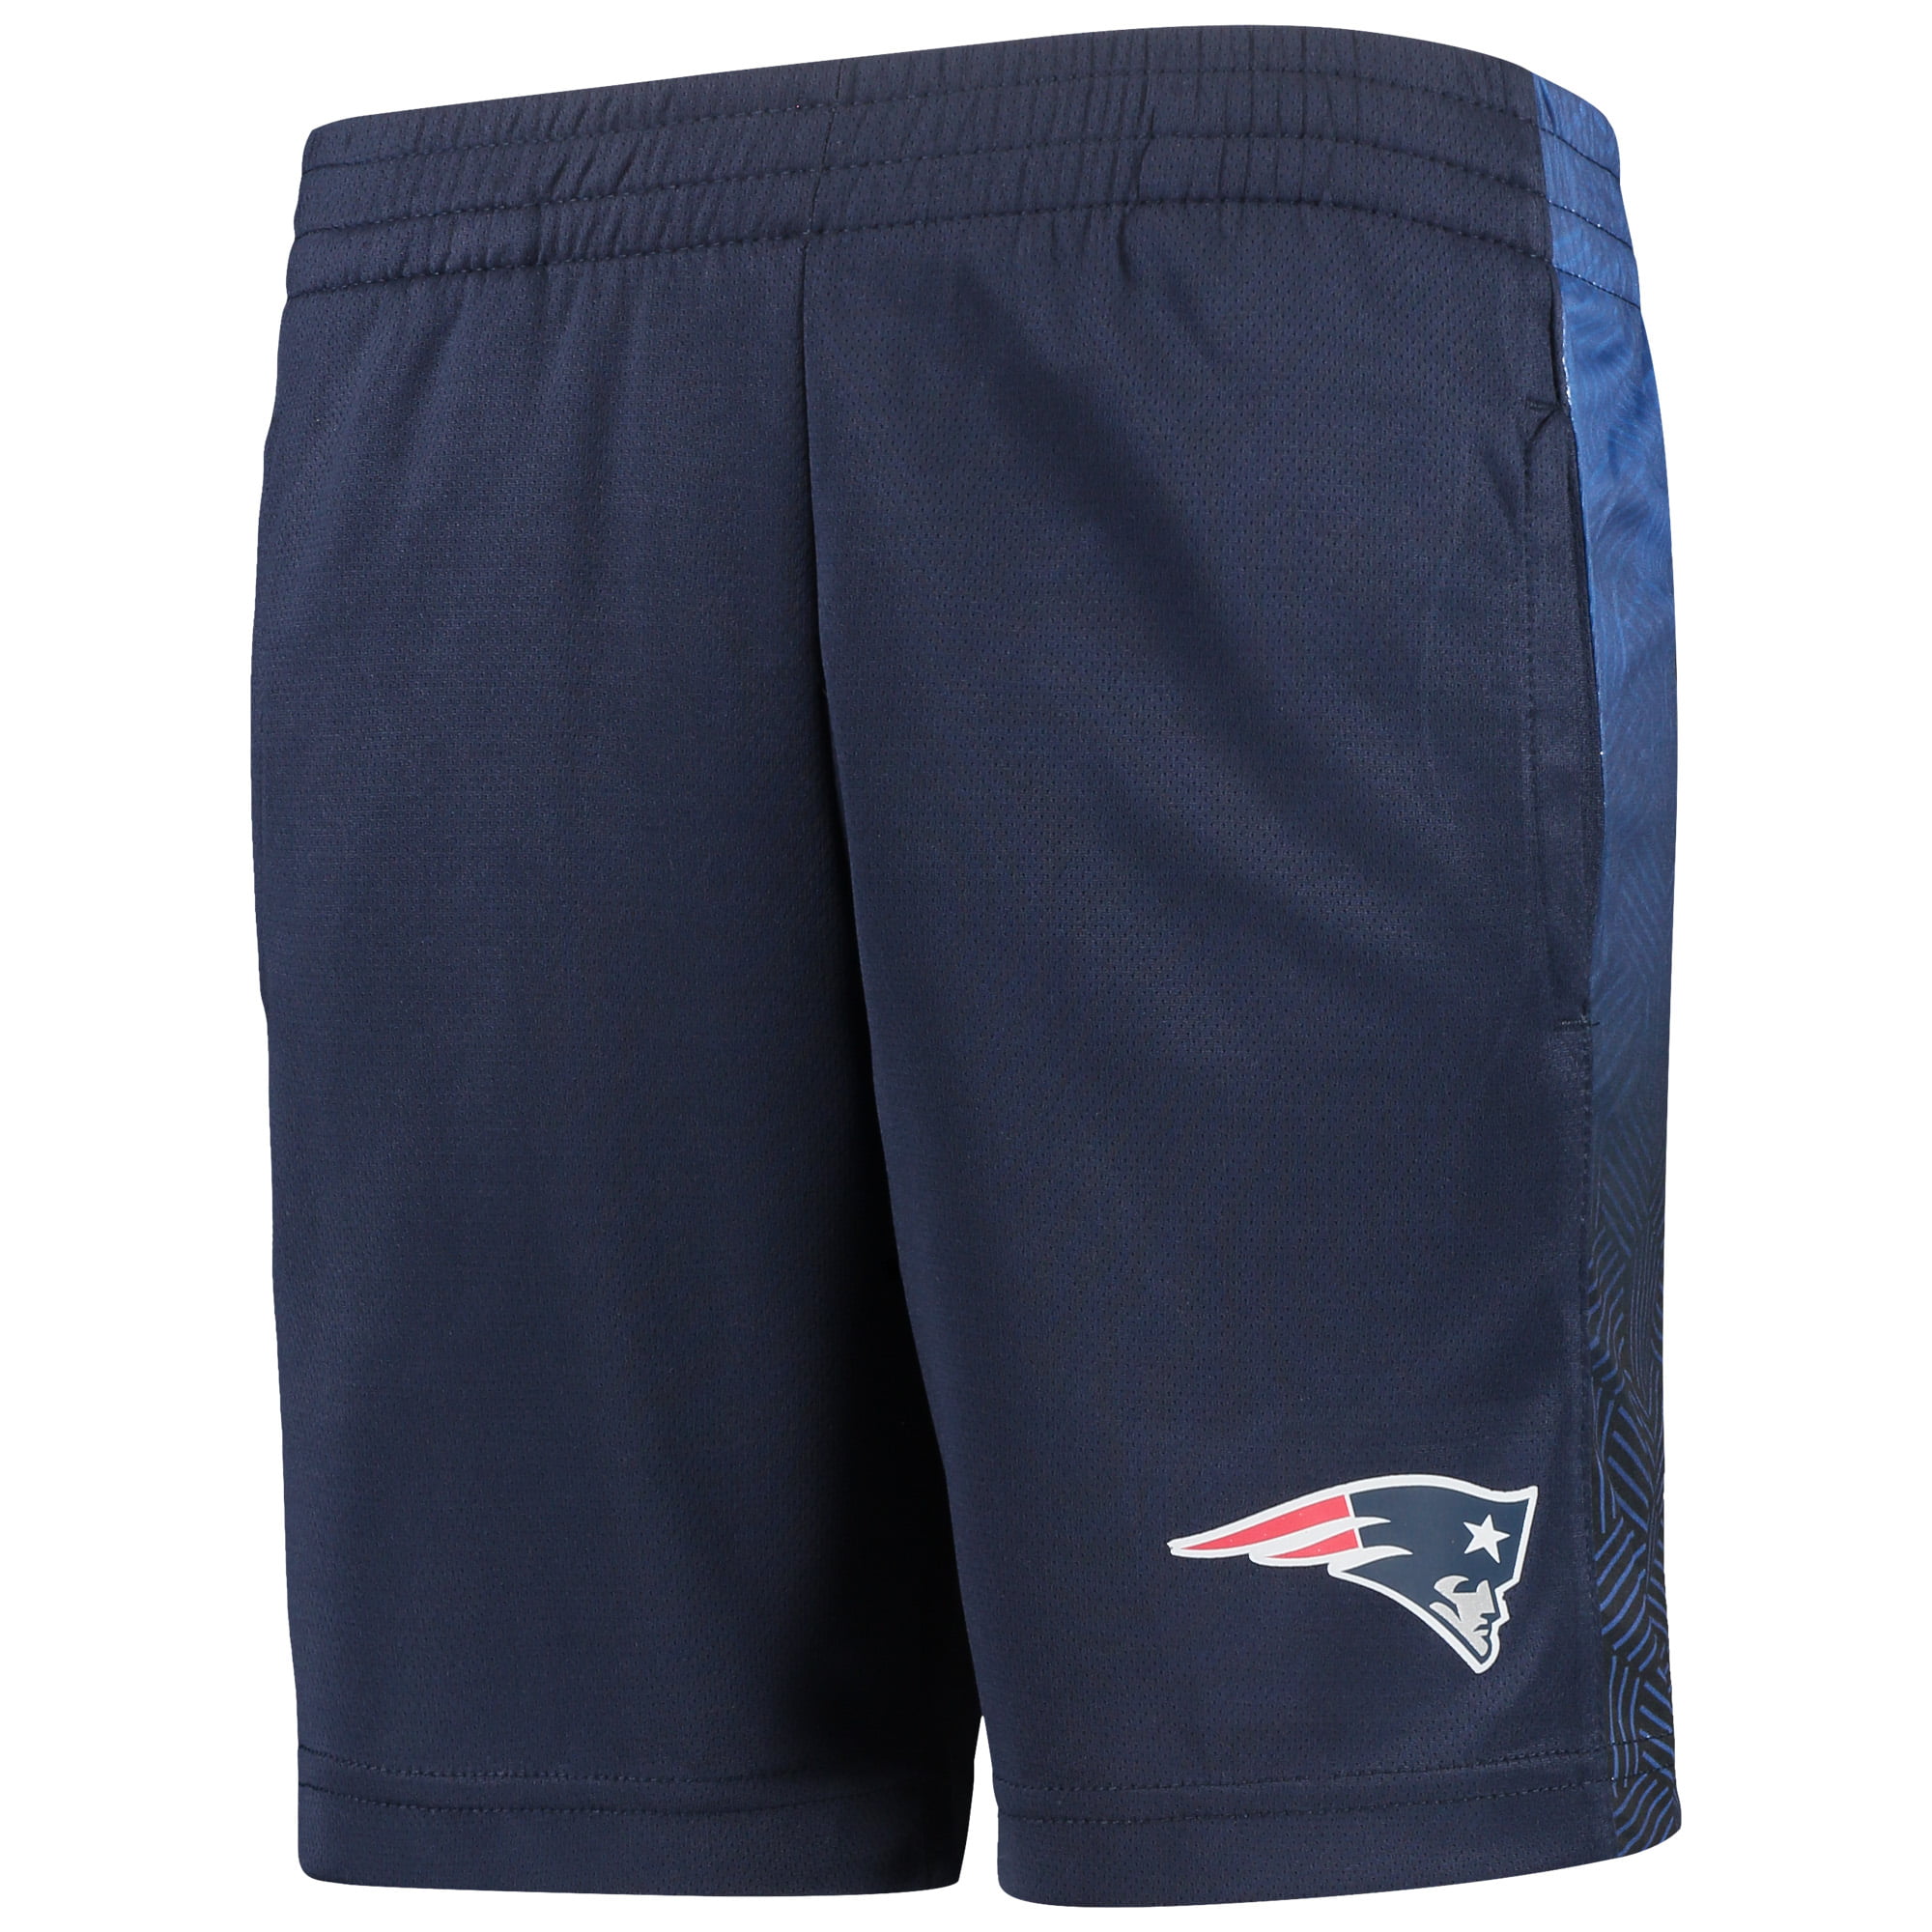 Youth Navy New England Patriots Mesh Shorts - Walmart.com